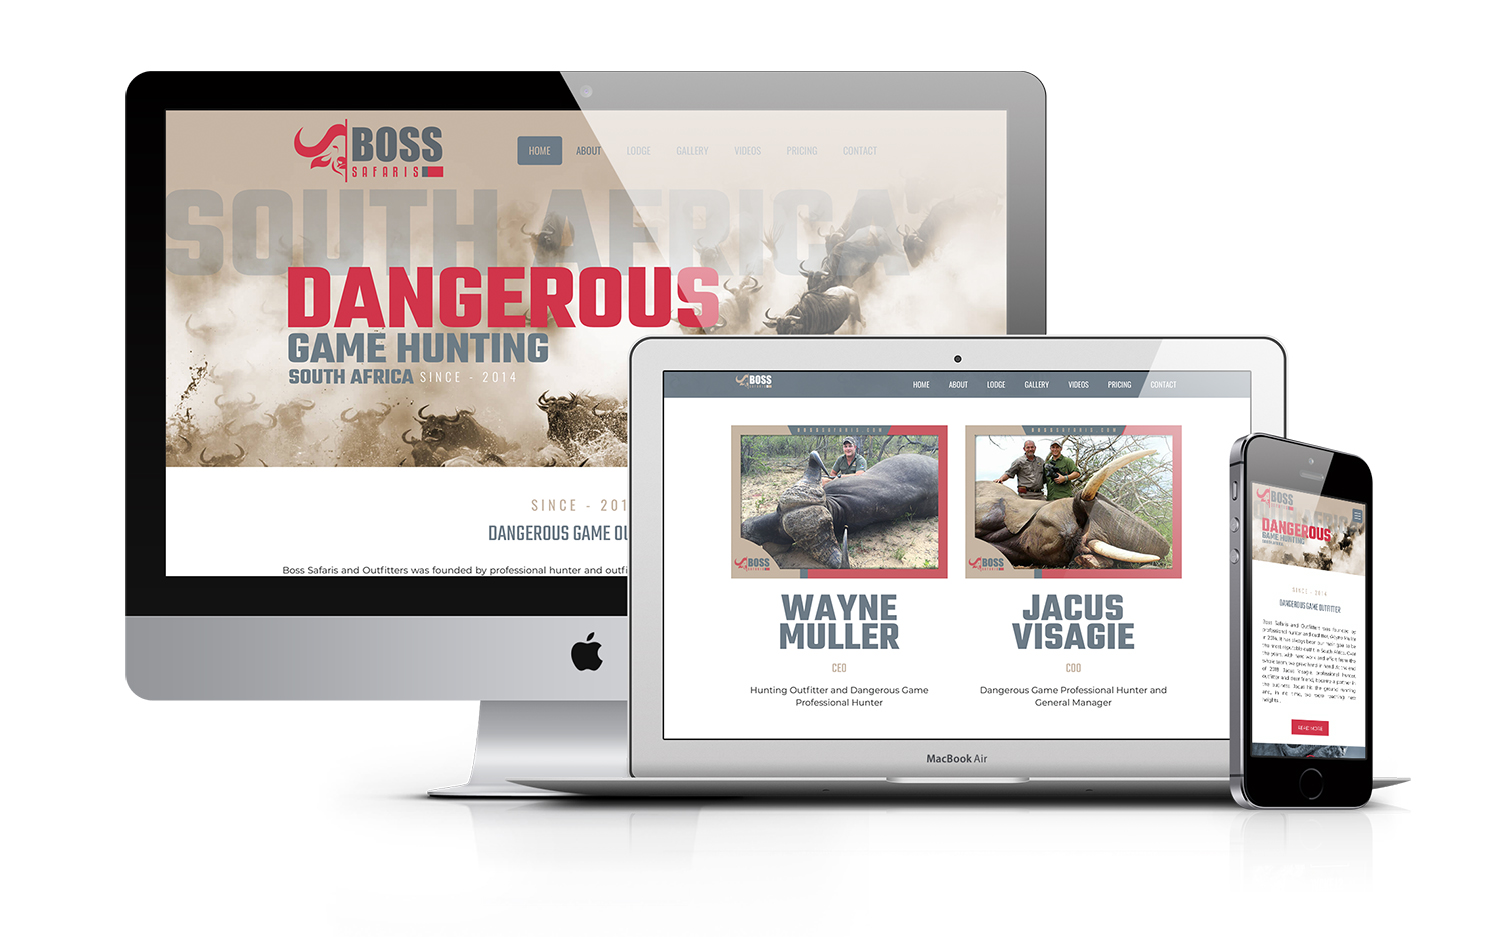 Boss Safaris African Hunting Outfitter Website Design